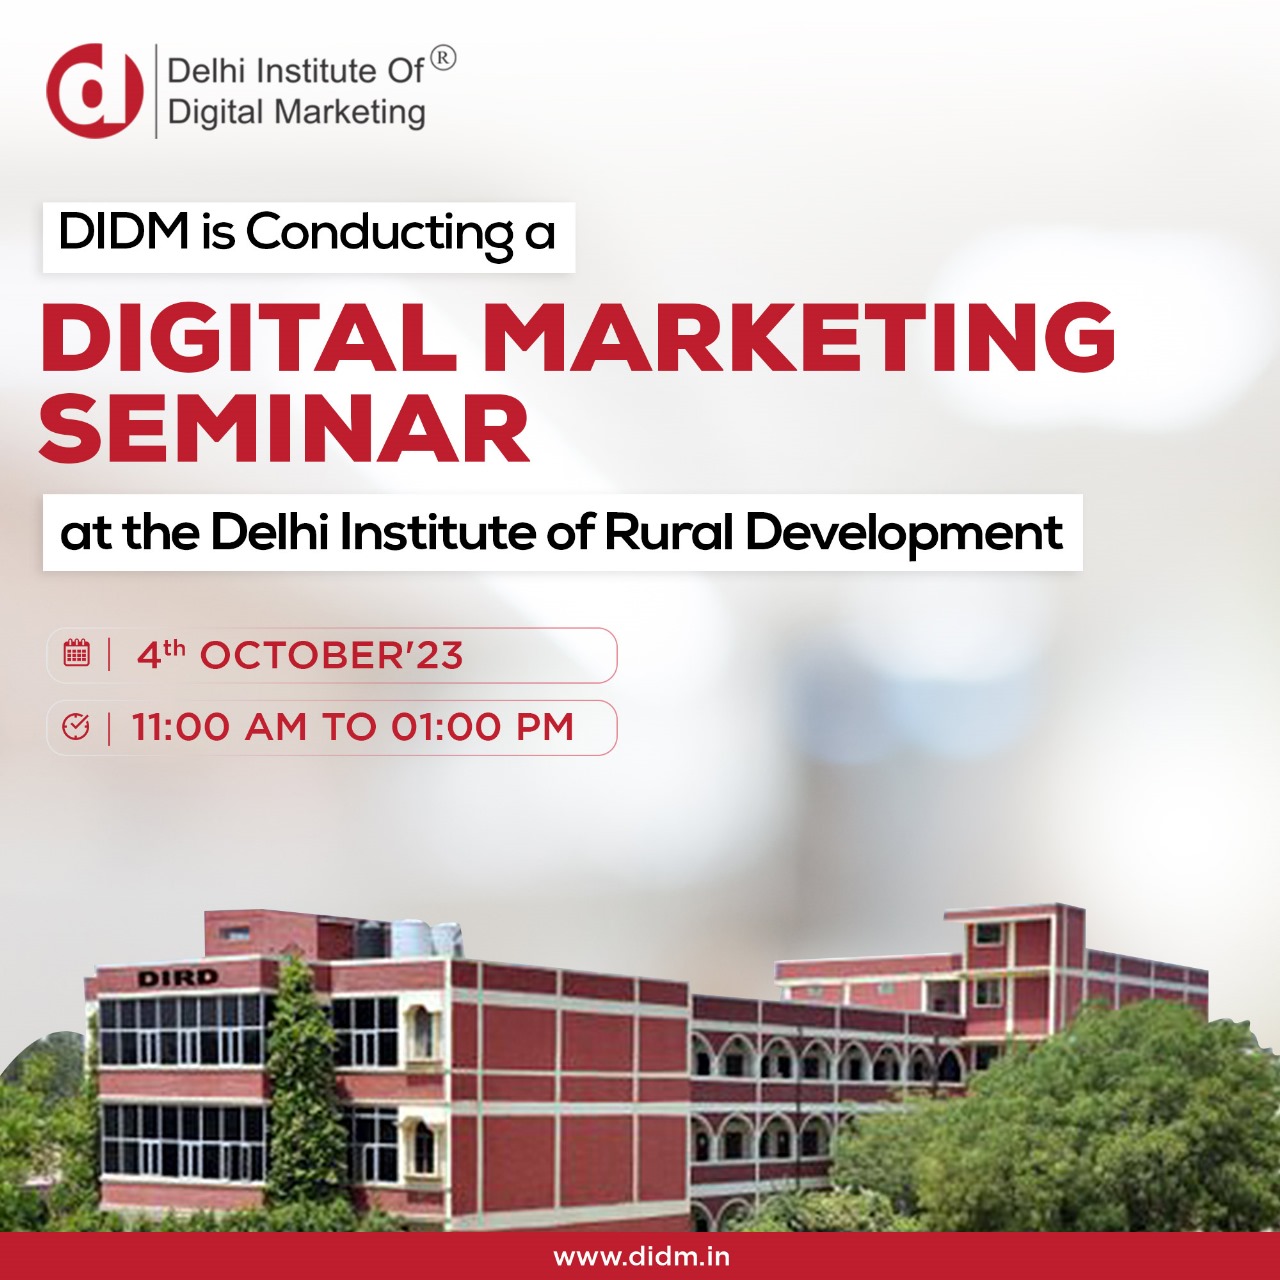 DIDM is conduct a digital marketing seminar at DIRD College